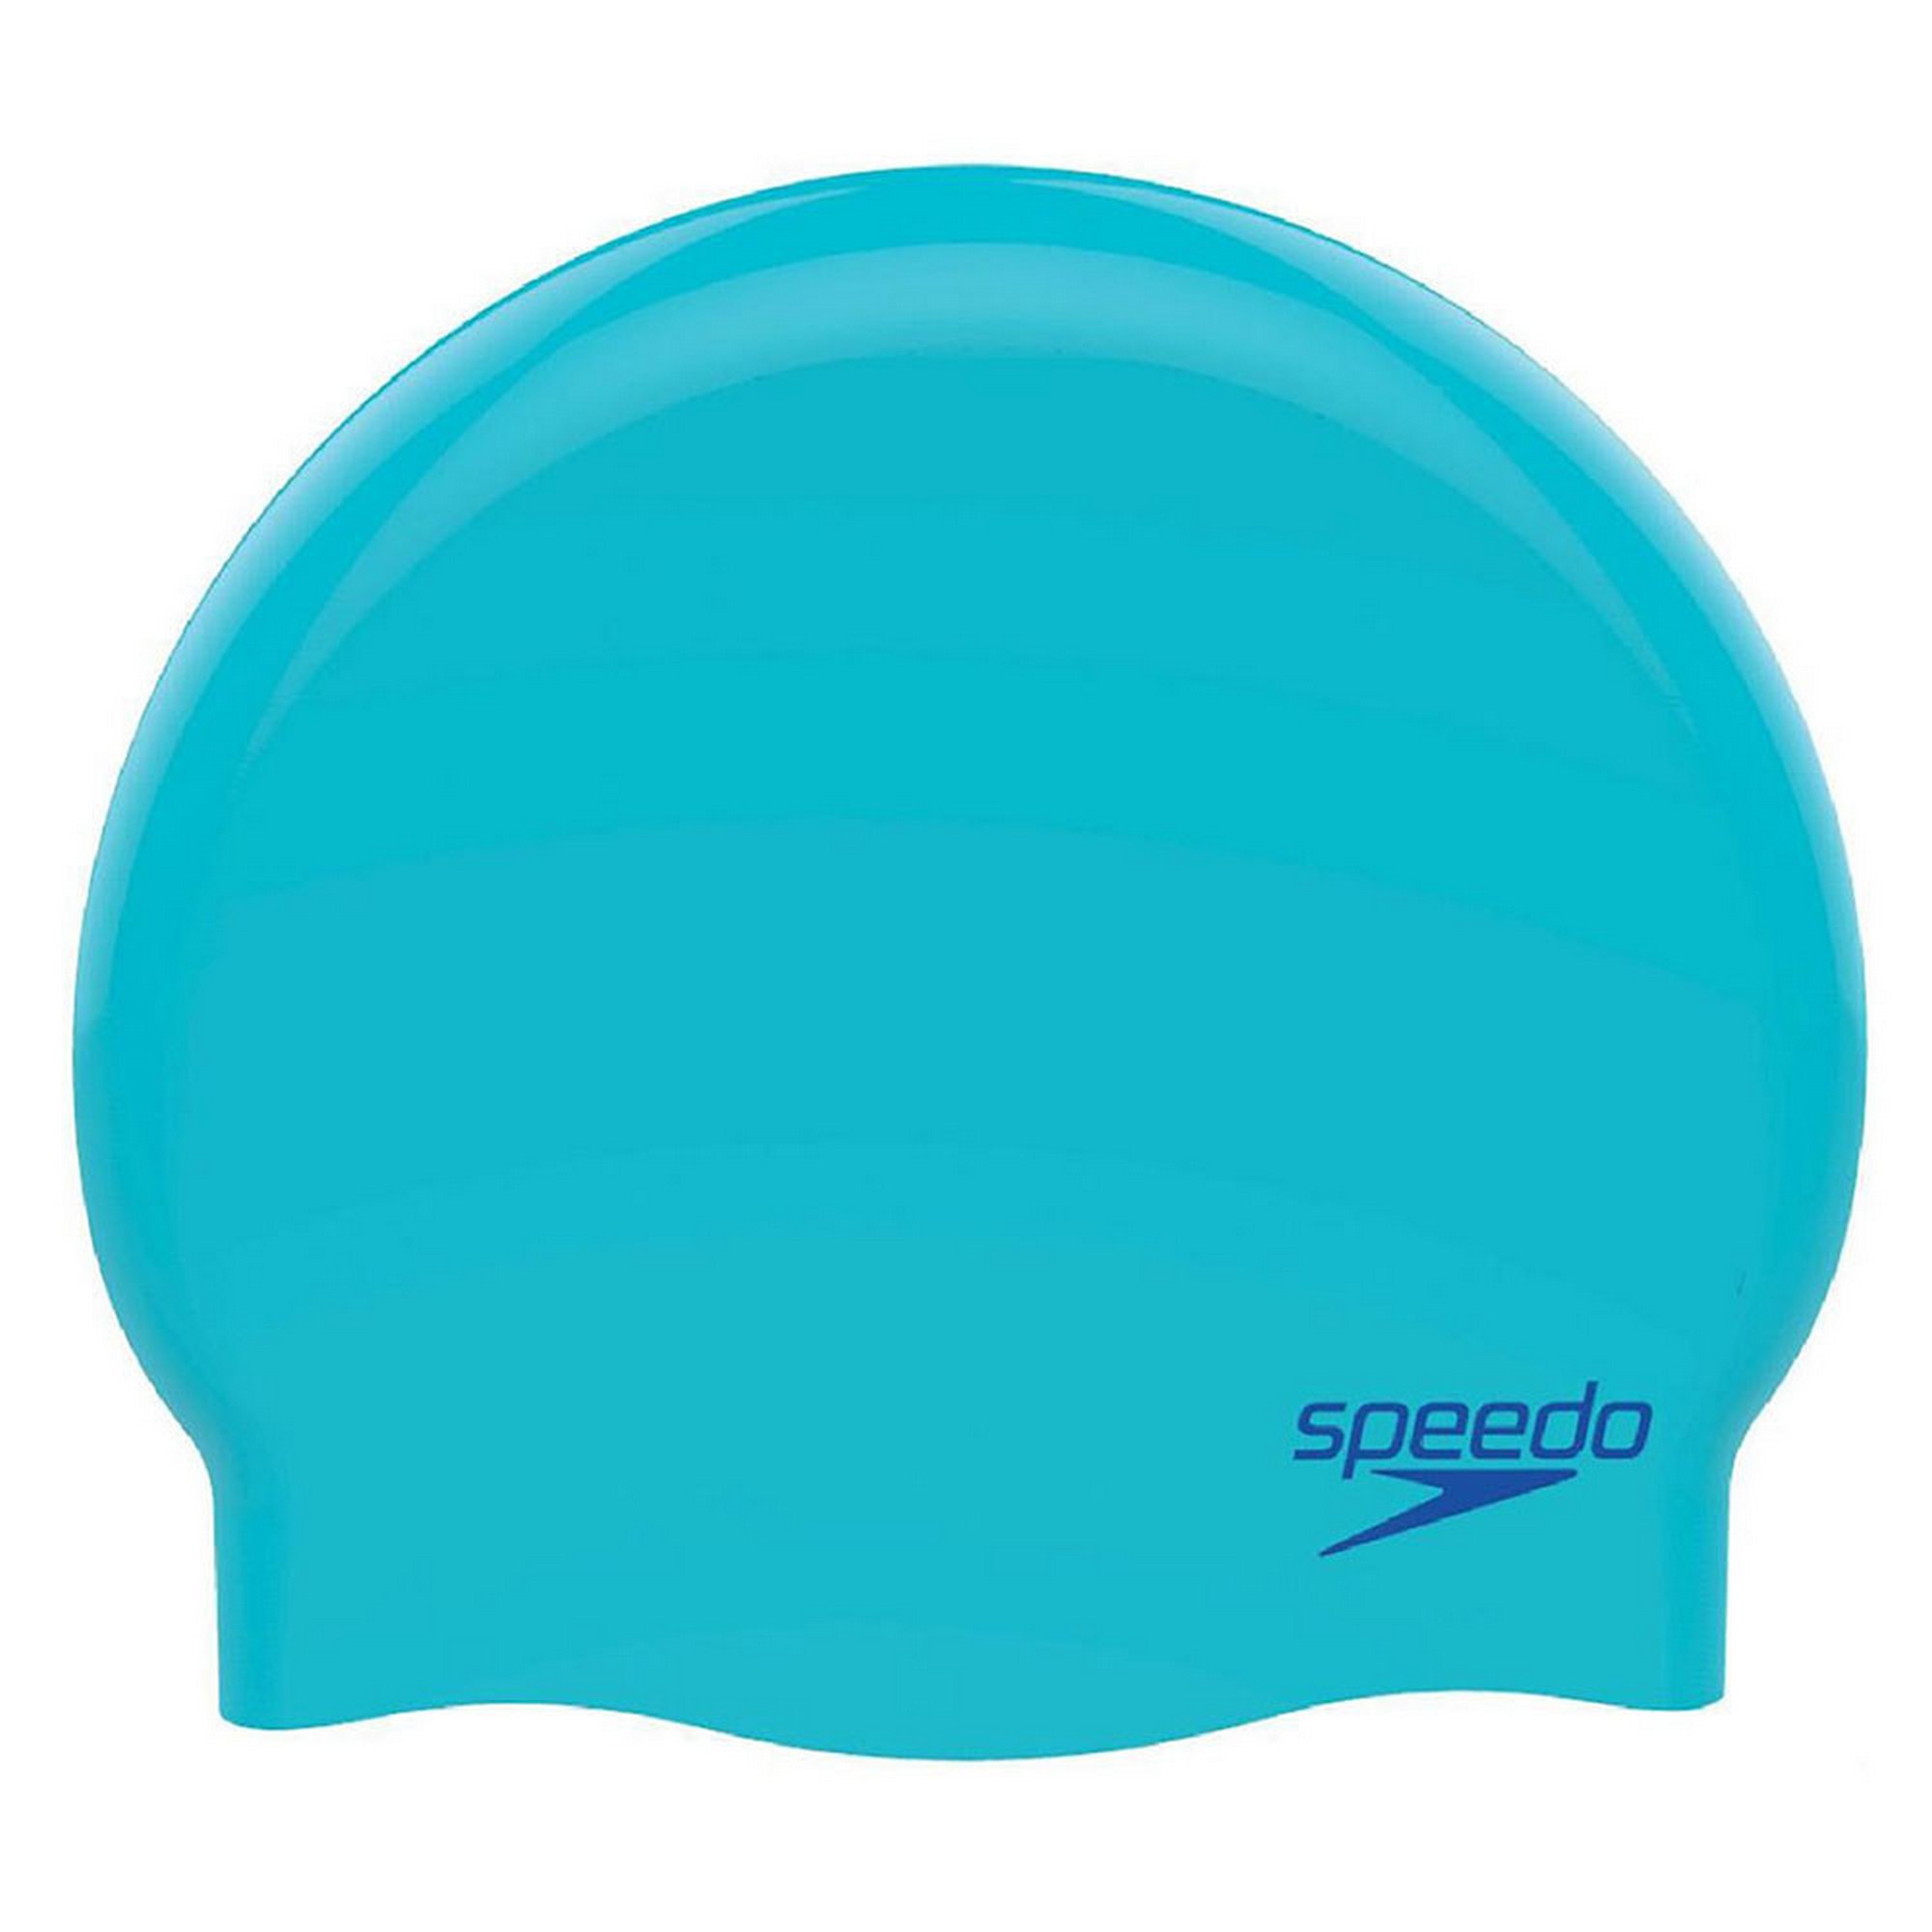     Speedo Molded Silicone Cap Jr 8-709908420 